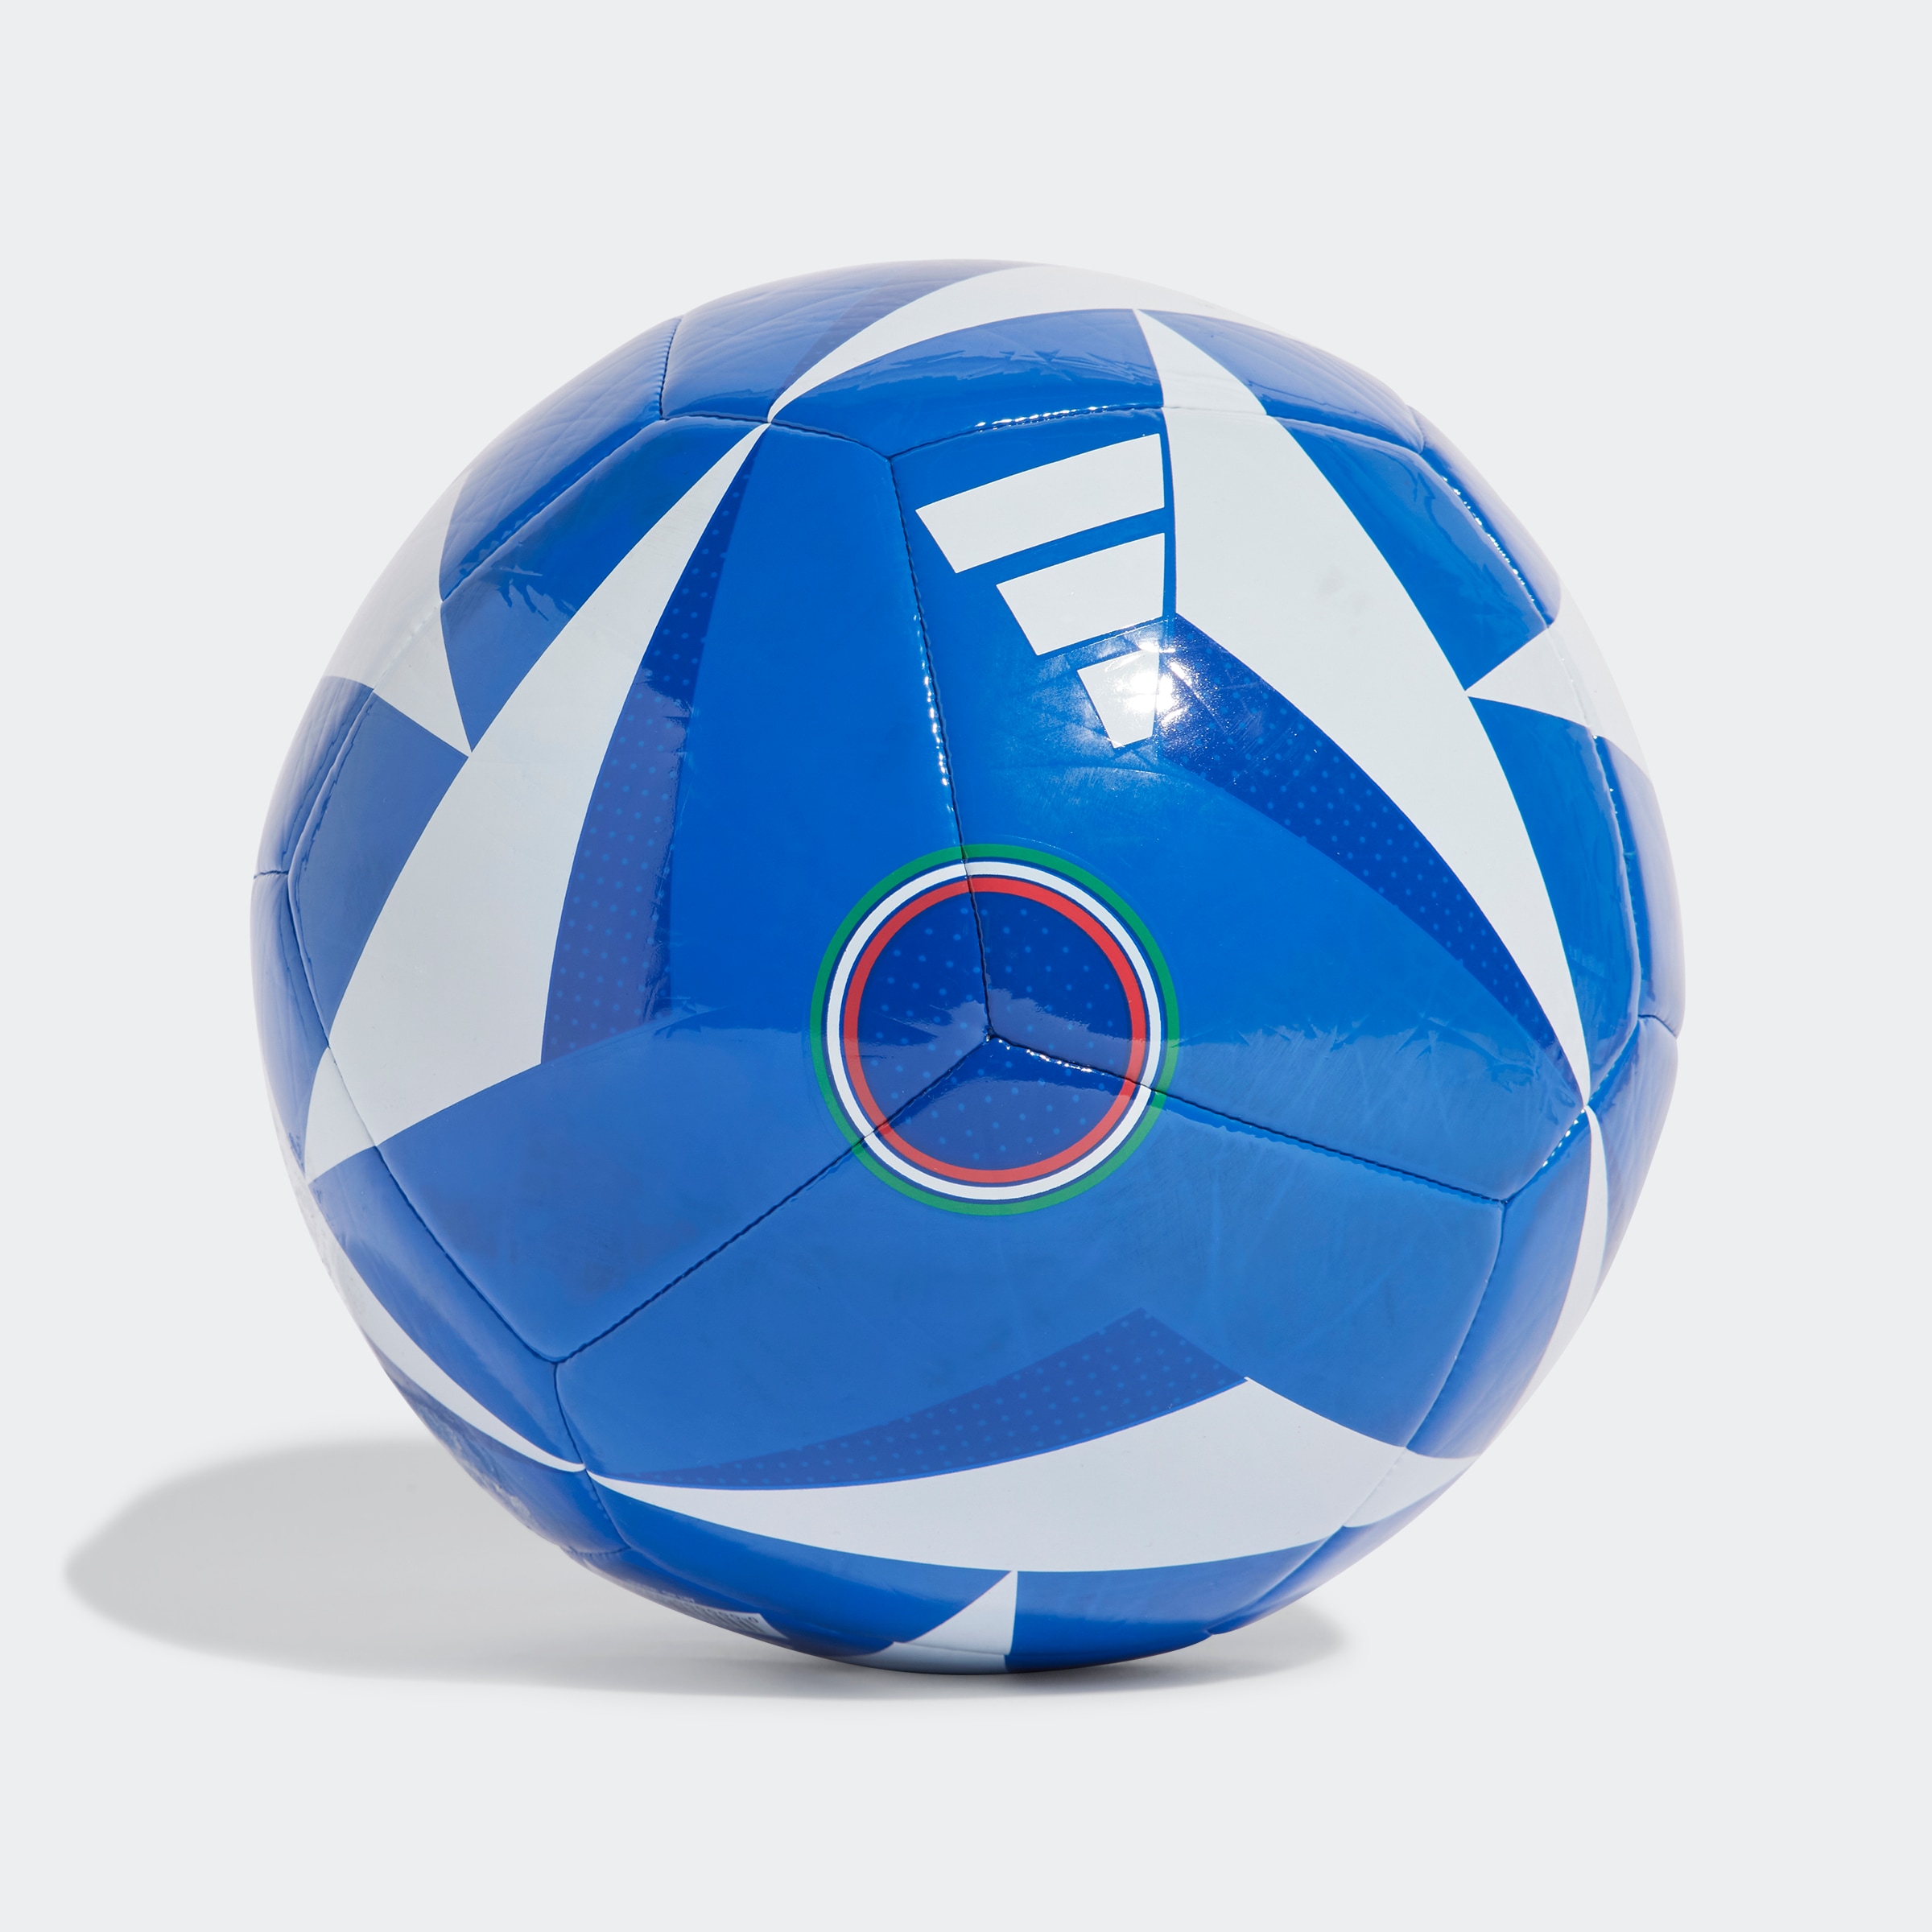 adidas Performance Fussball »EC24 CLB FIGC«, (1)